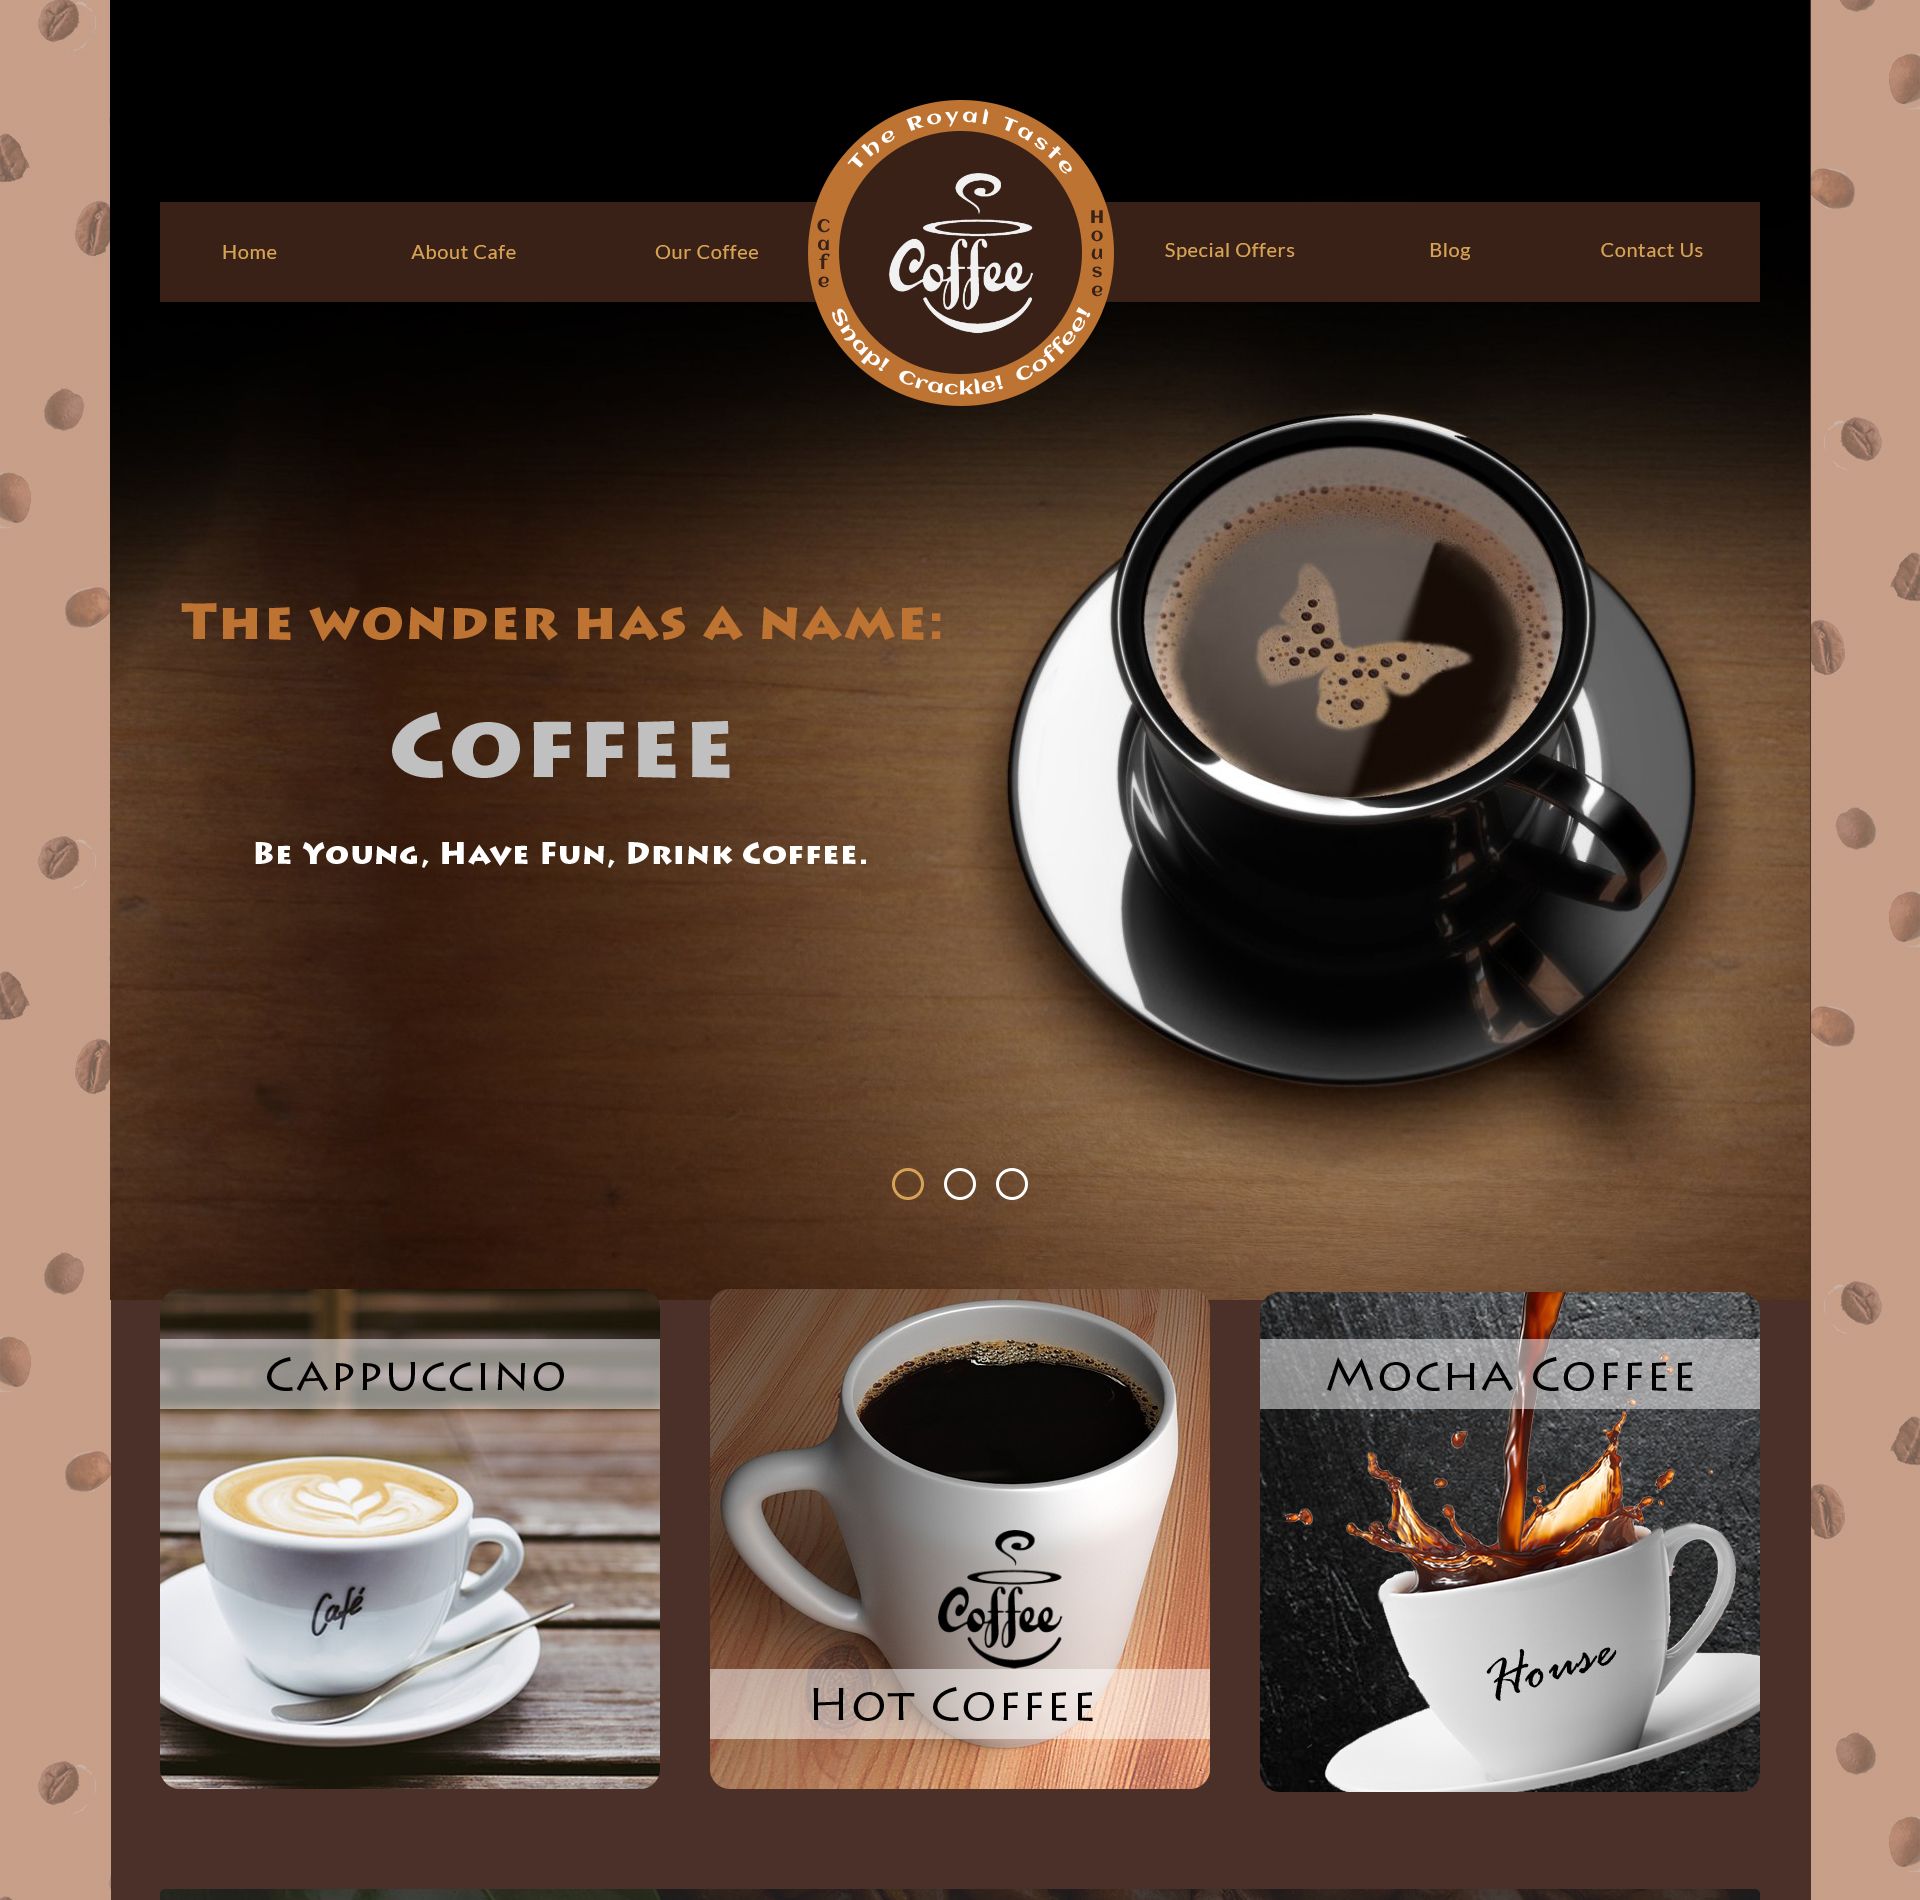 Cafe Coffee House - Coffee Shop PSD Template